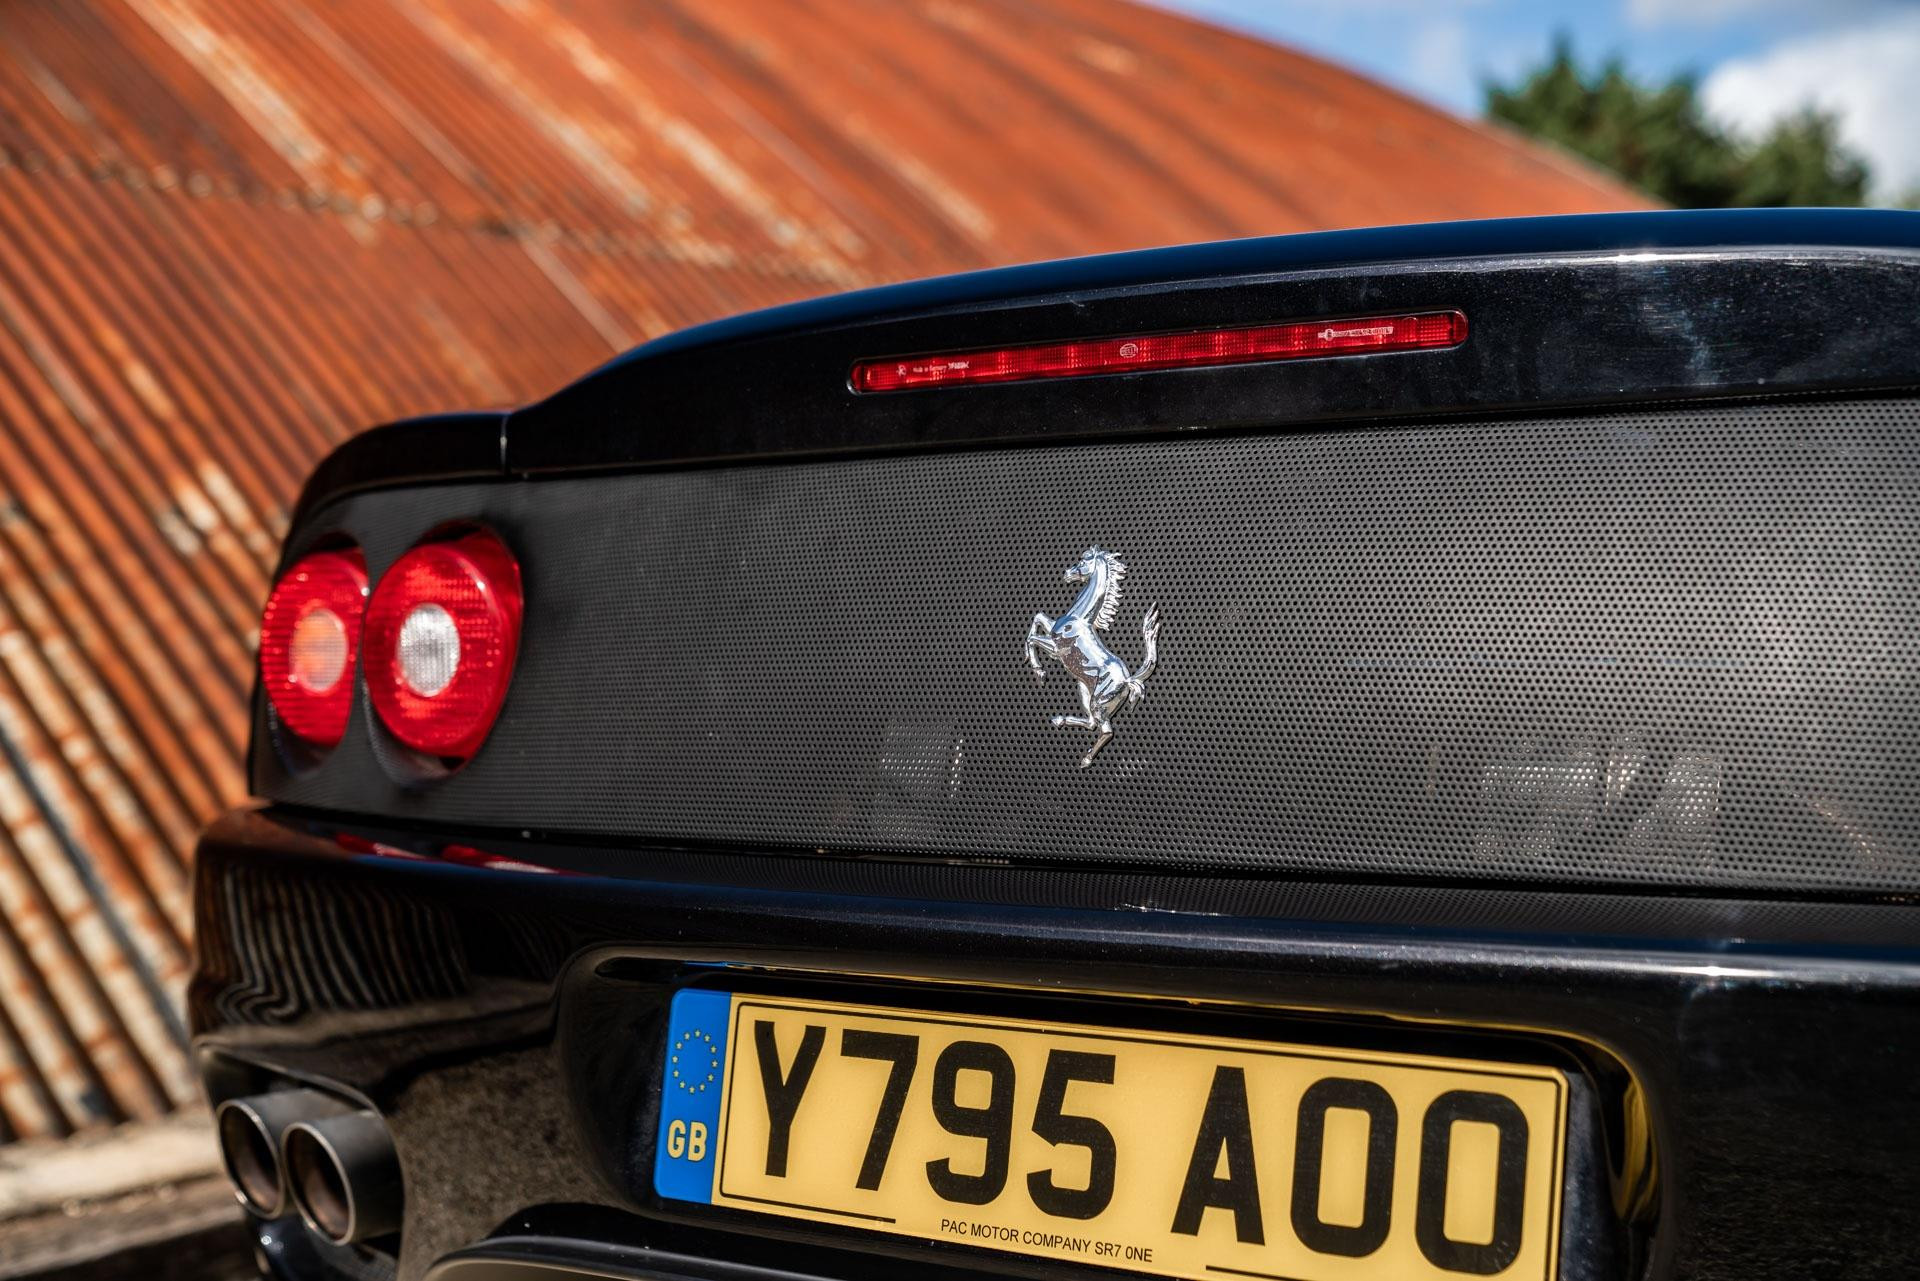 Chi tiết siêu xe Ferrari 360 Spider của David Beckham - 10